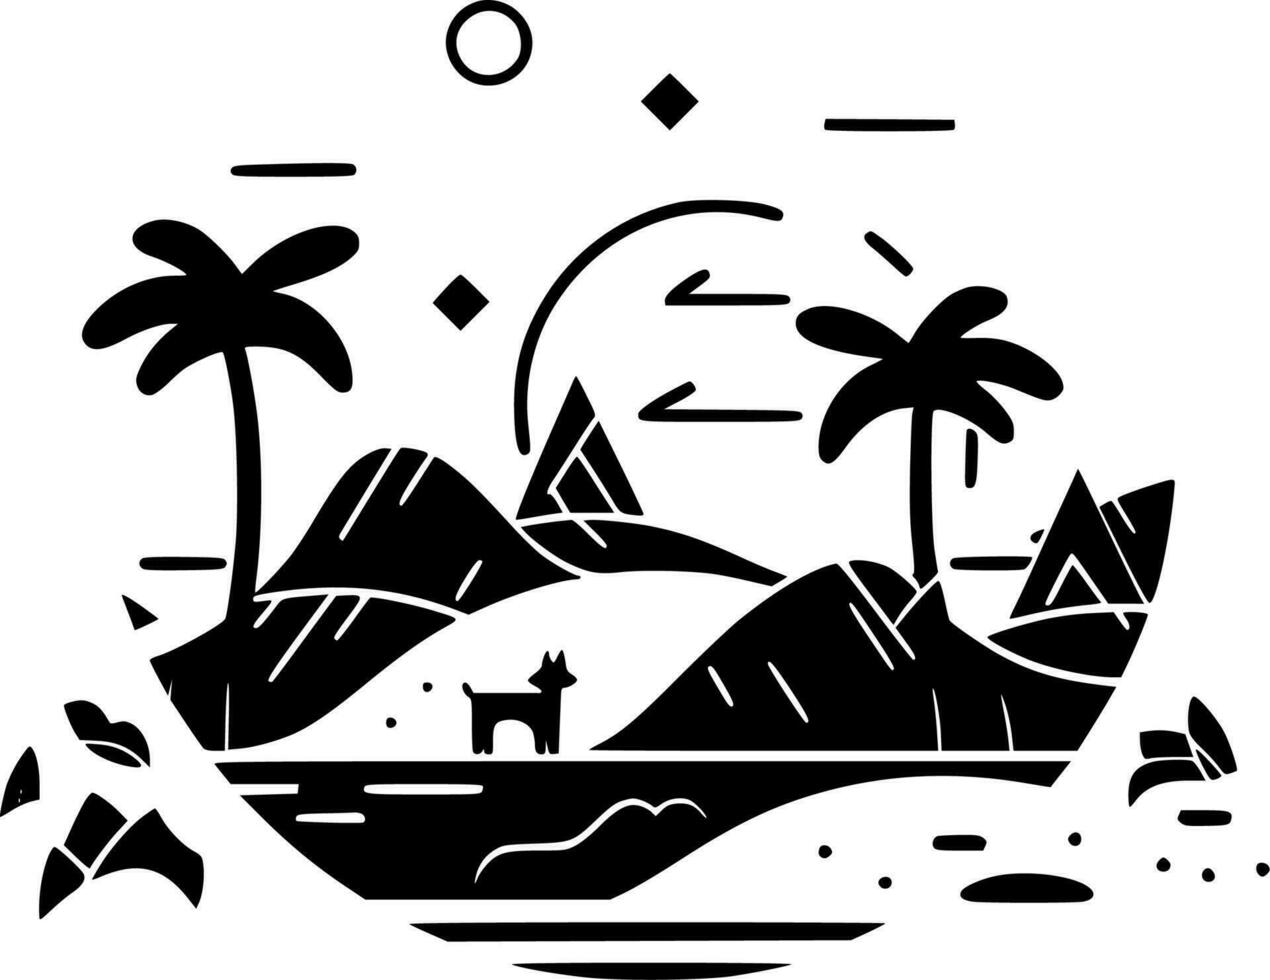 strand achtergrond, zwart en wit vector illustratie